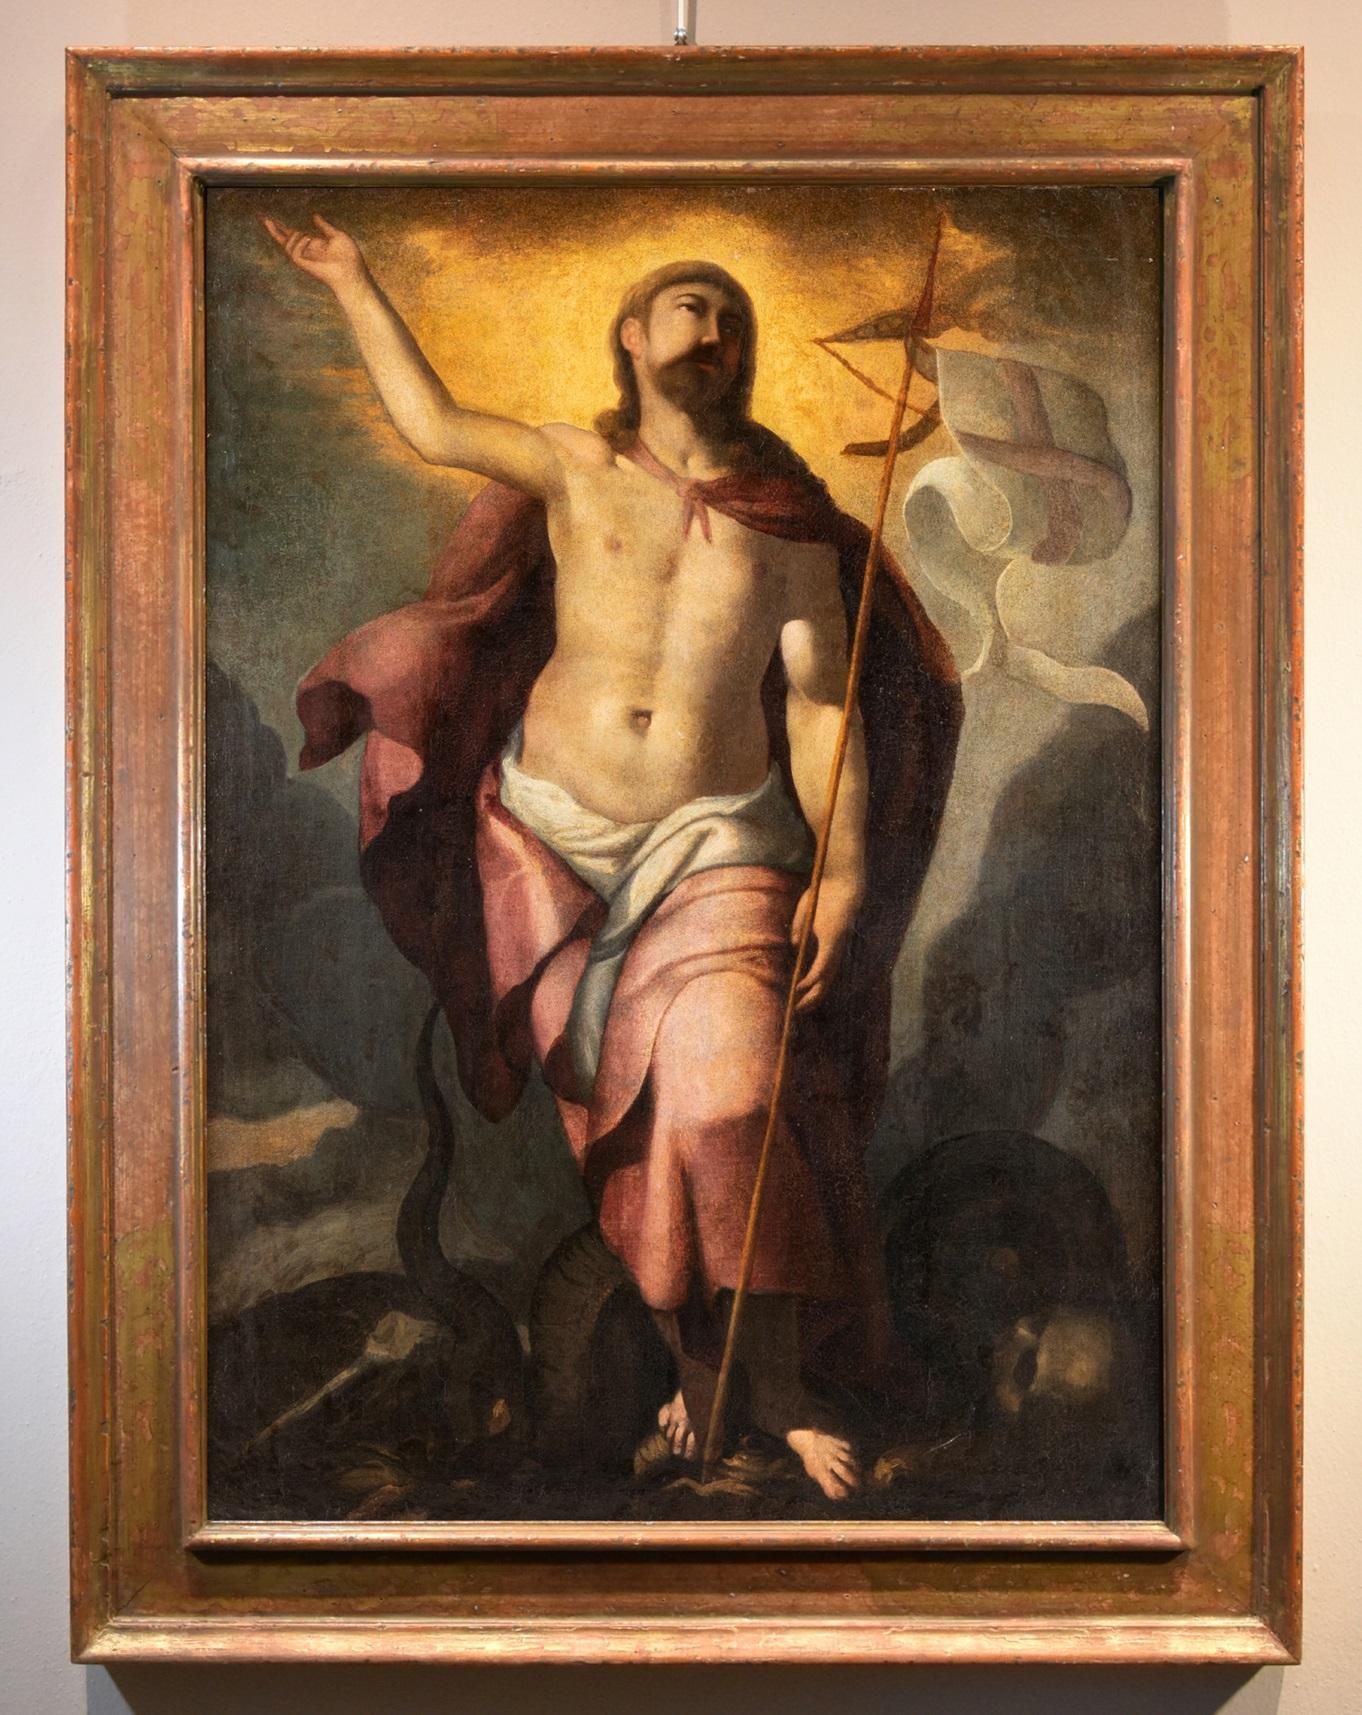 Tiziano Vecellio (Pieve di Cadore 1490 - Venice 1576) Portrait Painting – Resurrection Christus Tiziano 16/17. Jahrhundert Gemälde Öl auf Leinwand Alter Meister Italien